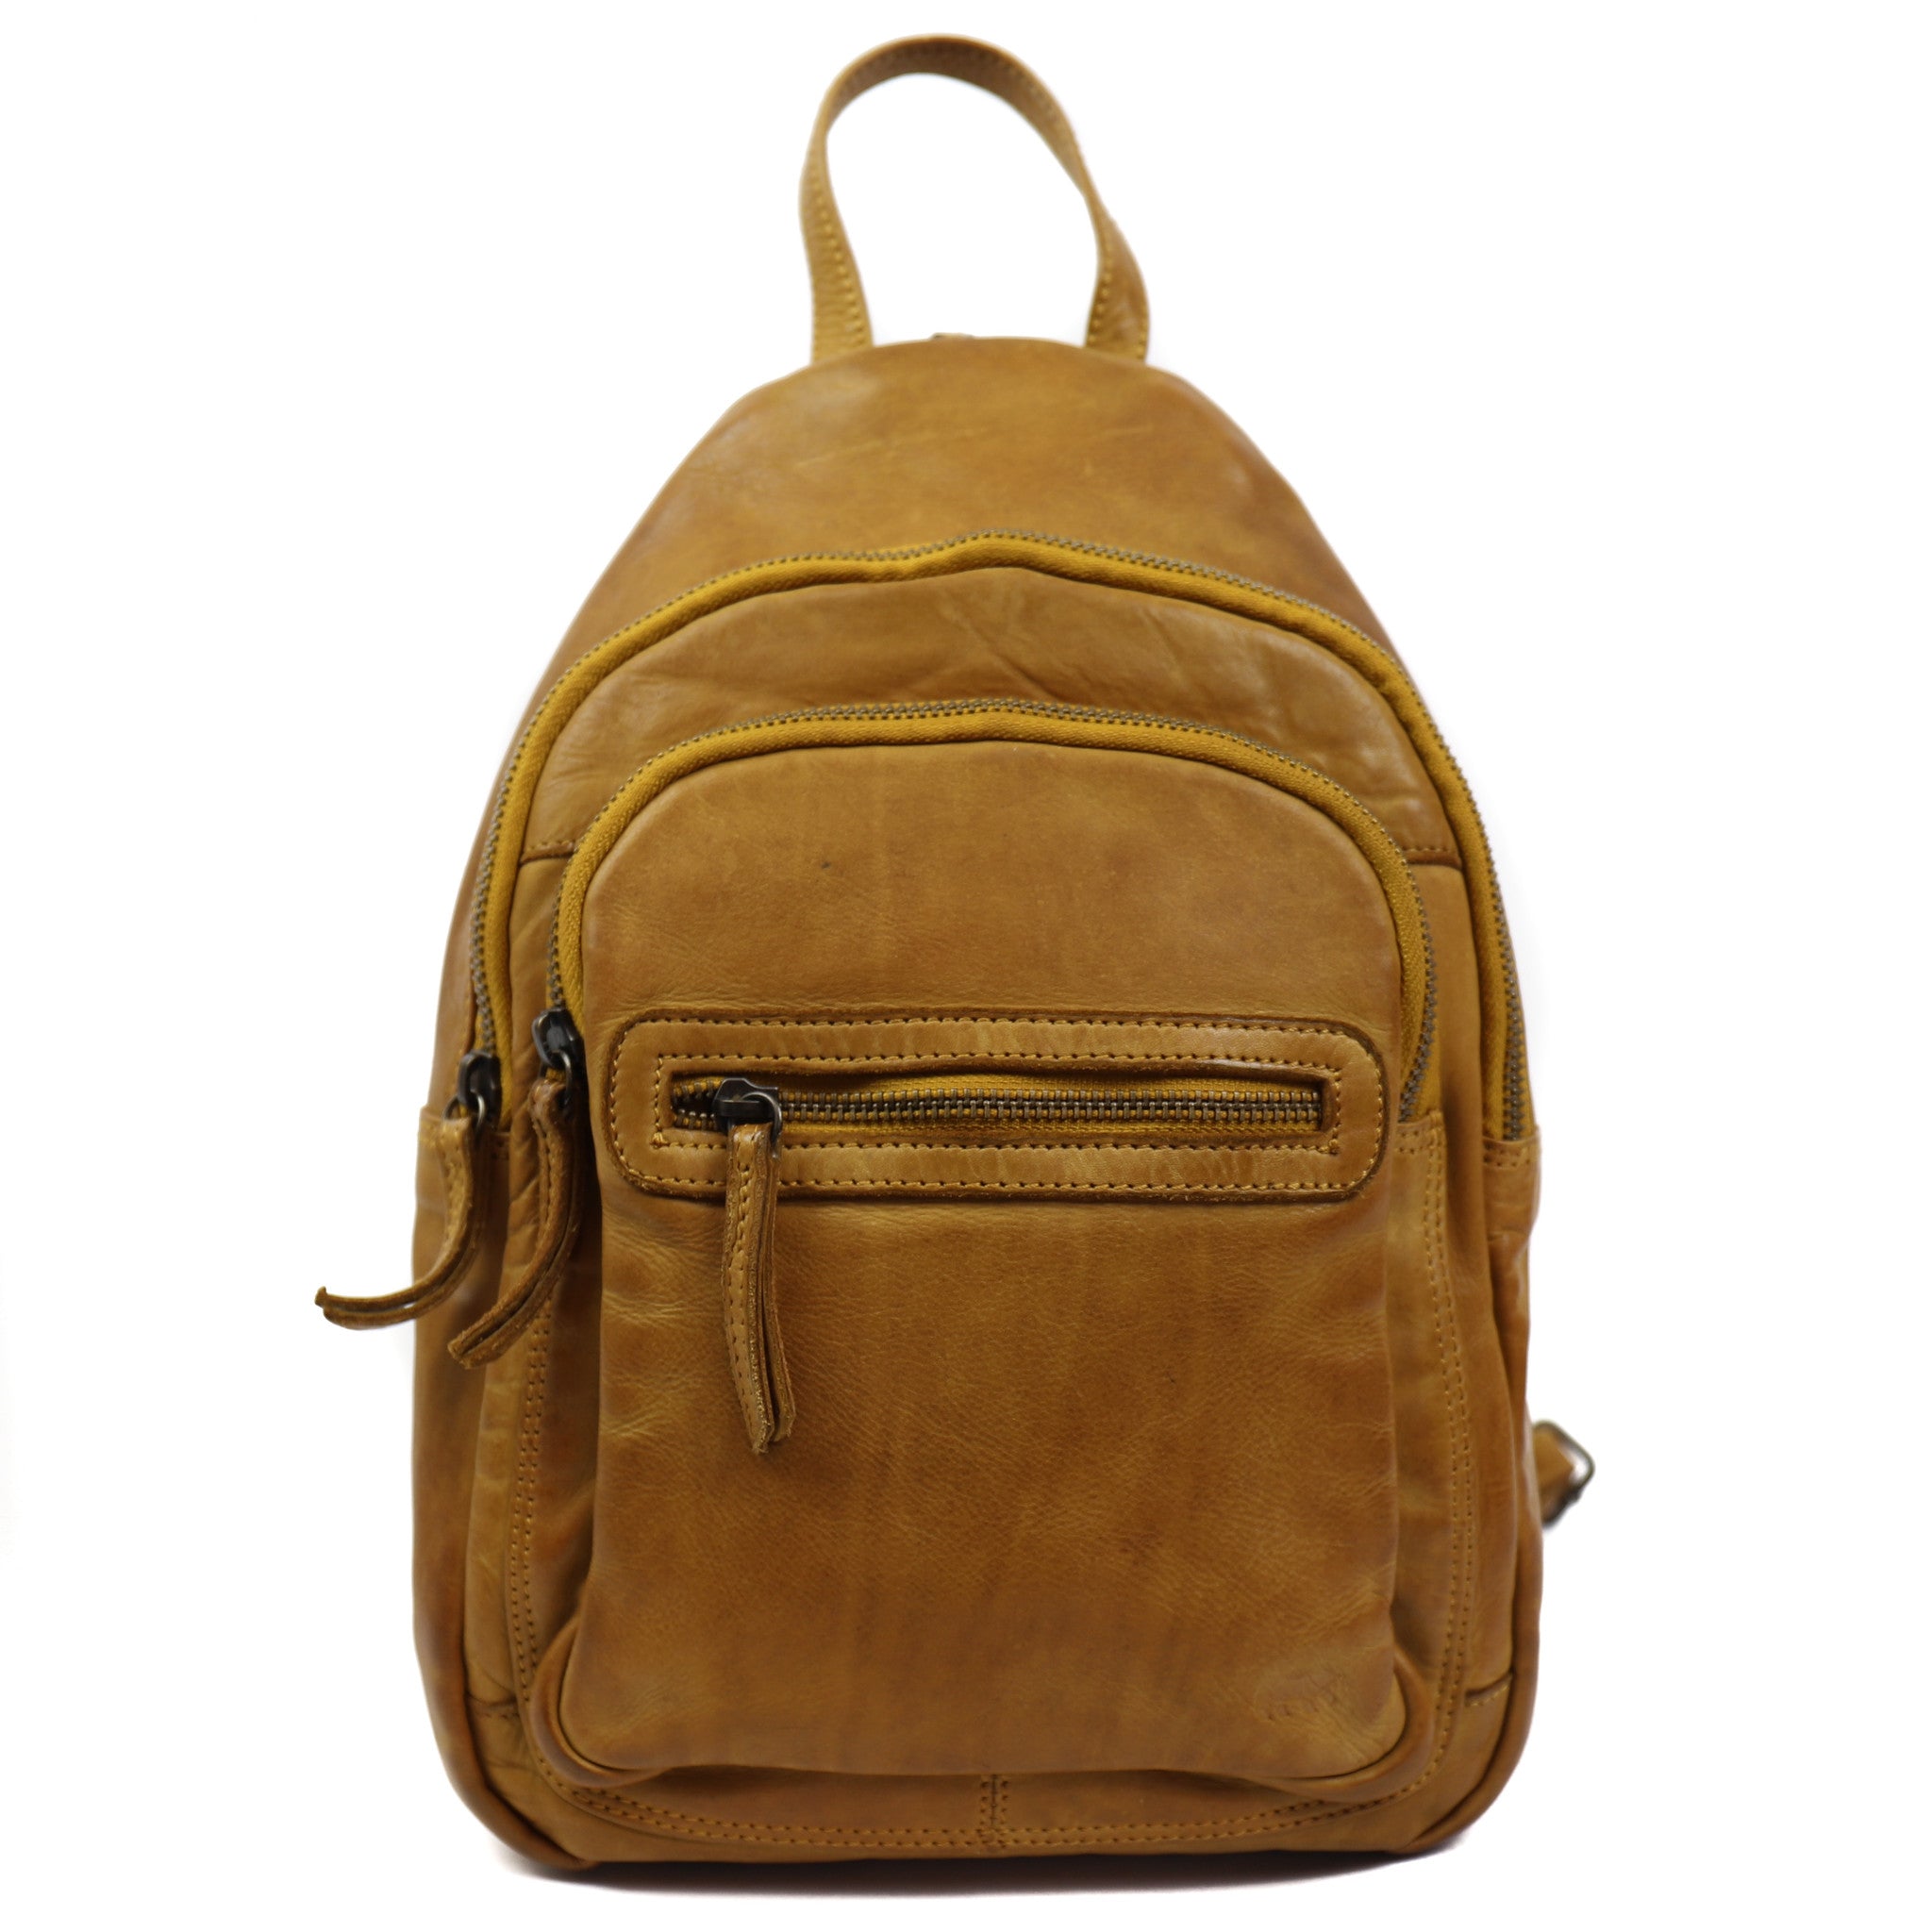 Backpack 'Joy' yellow ocher - CL 36413